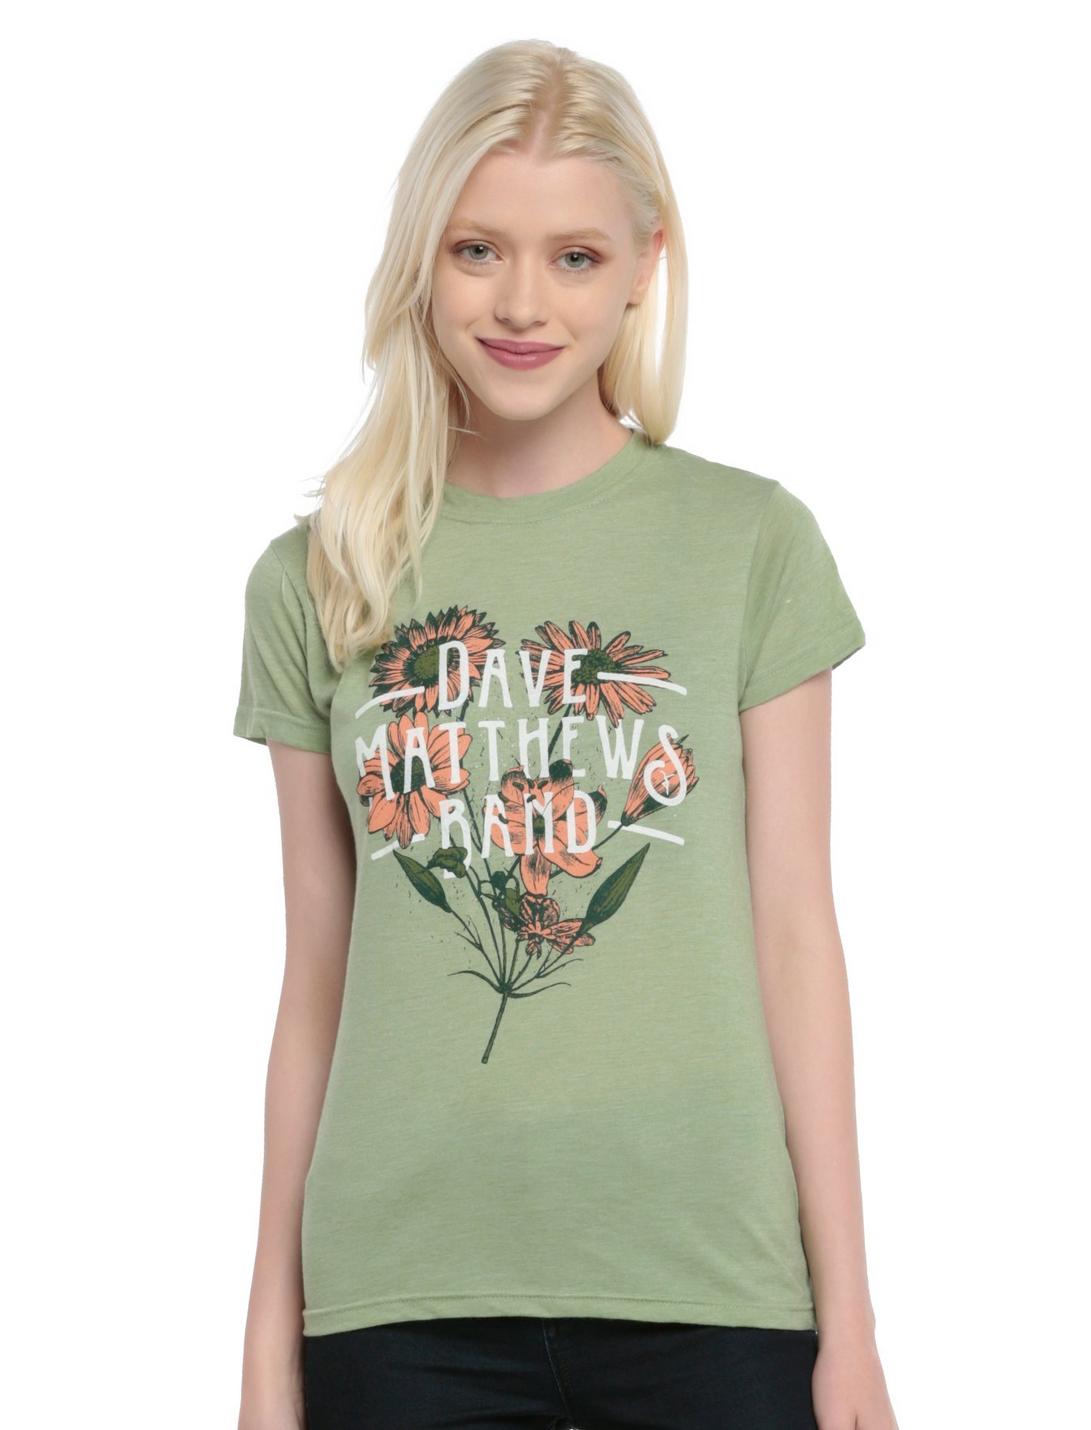 Dave Matthews Band Floral Logo T-Shirt, MINT, hi-res